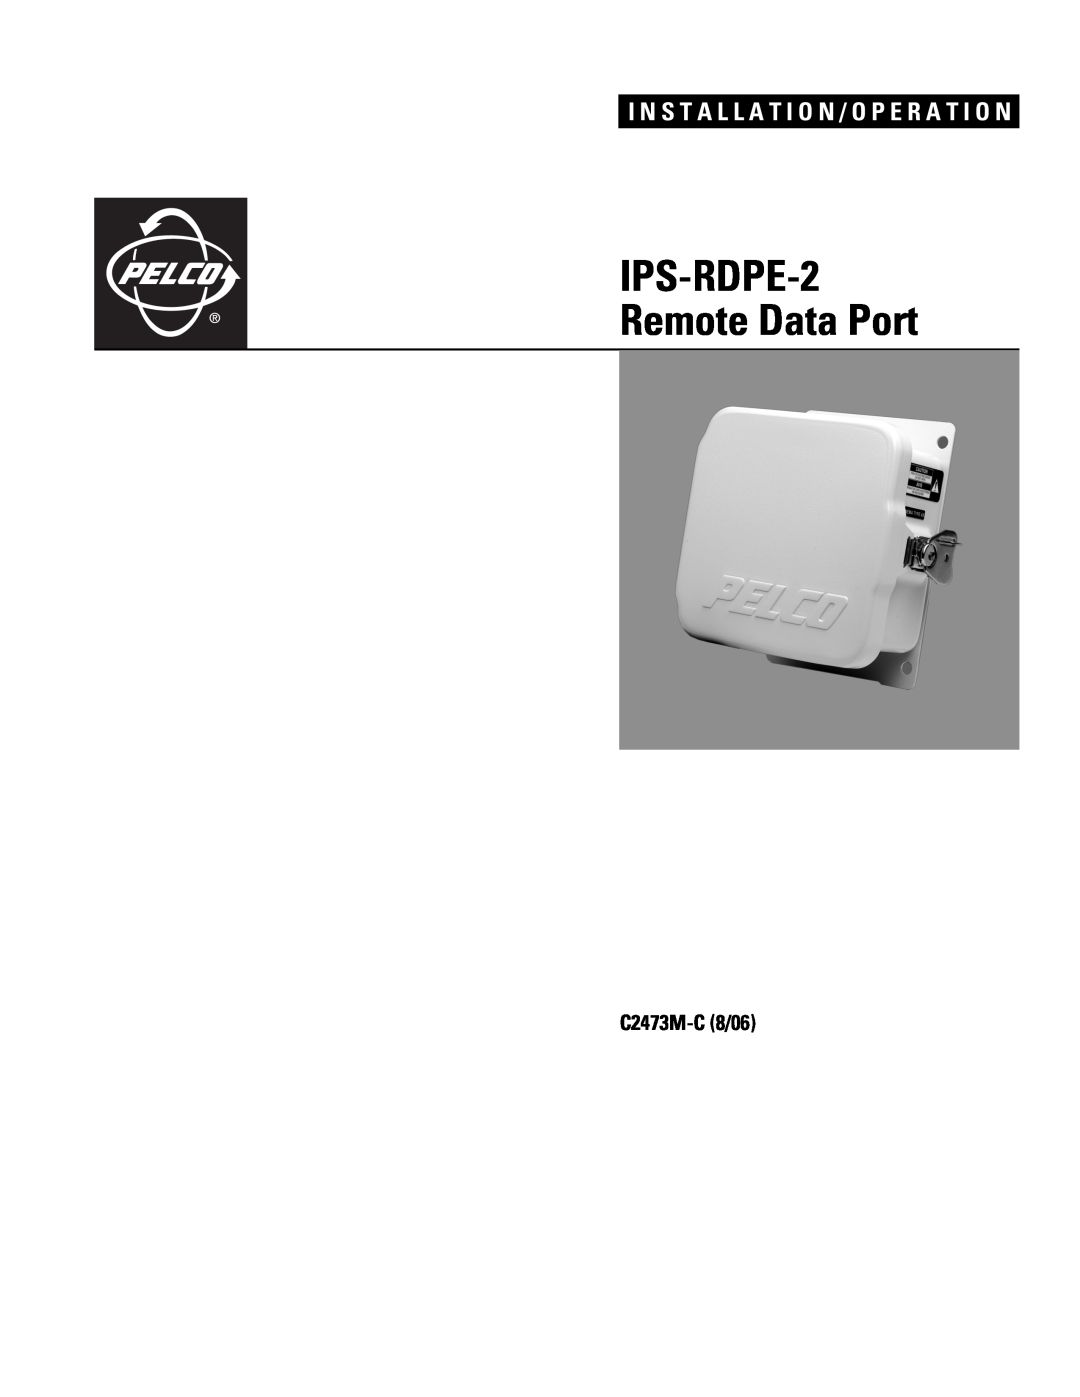 Pelco ips-rdpe-2 manual IPS-RDPE-2 Remote Data Port, I N S T A L L A T I O N / O P E R A T I O N, C2473M-C 8/06 